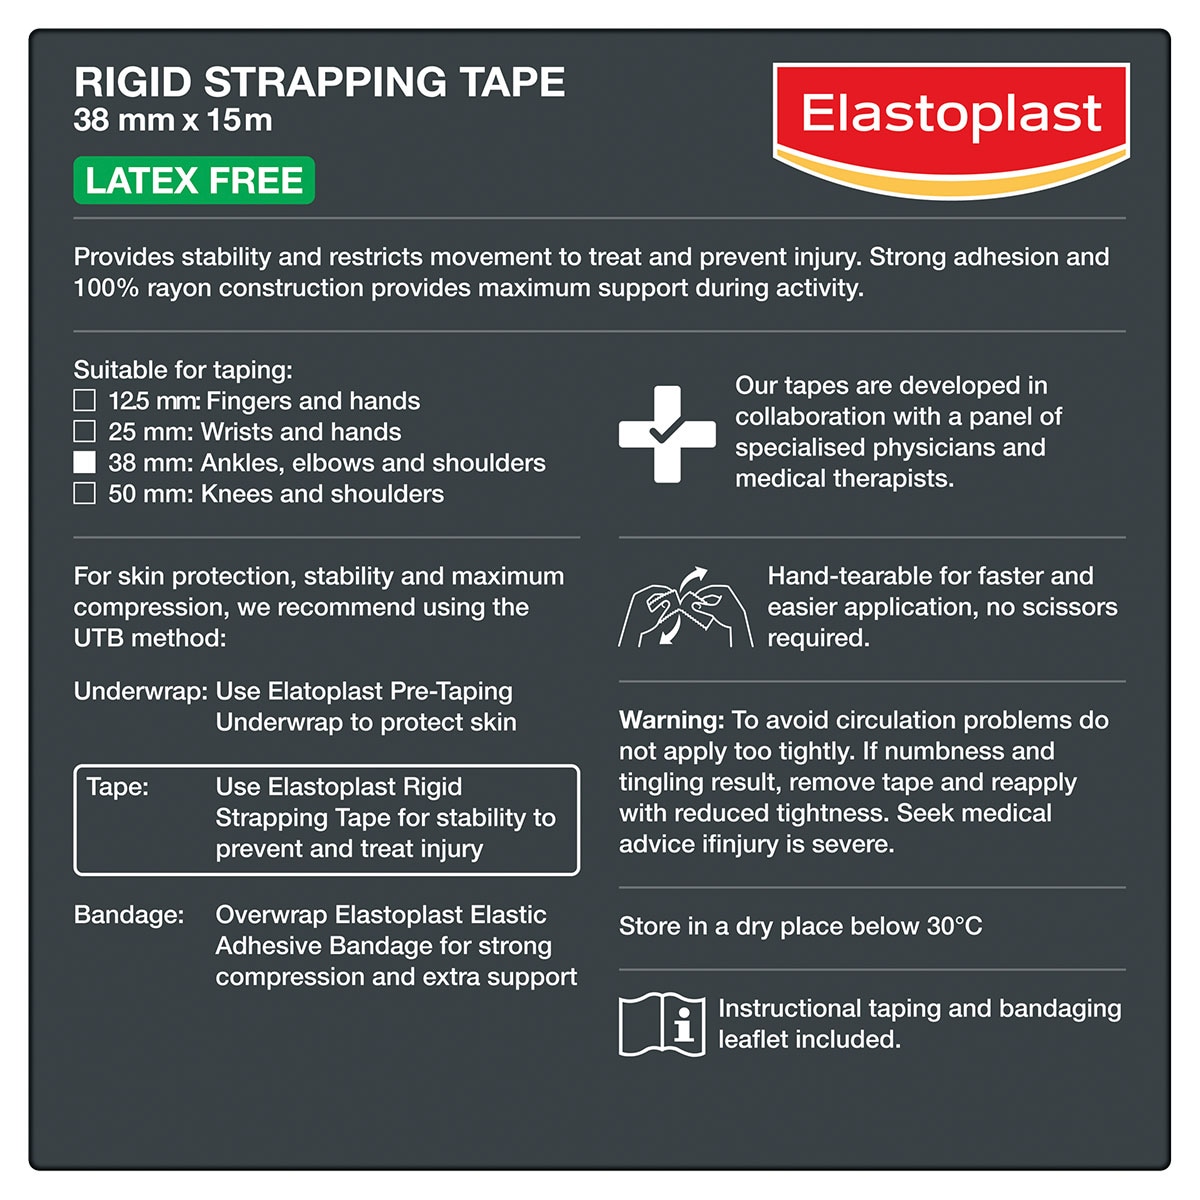 Elastoplast Rigid Strapping Tape 38mm x 15m Roll Value Pack